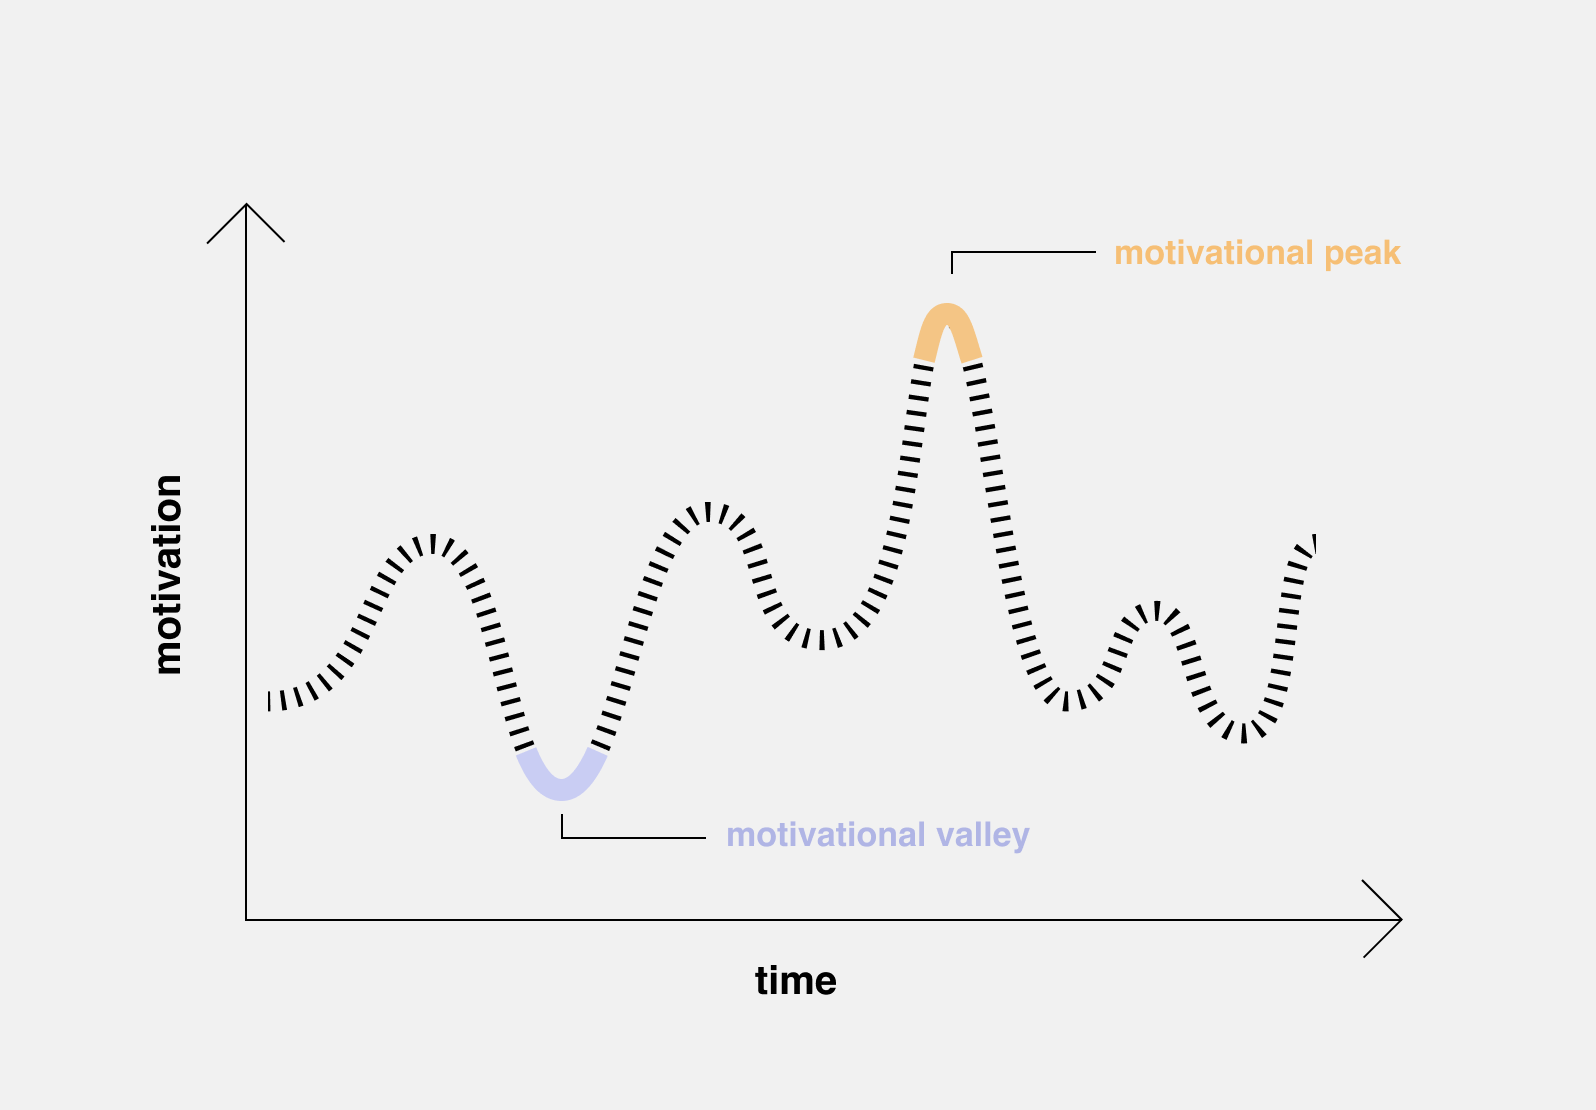 Motivational waves - motivational valleys and peaks